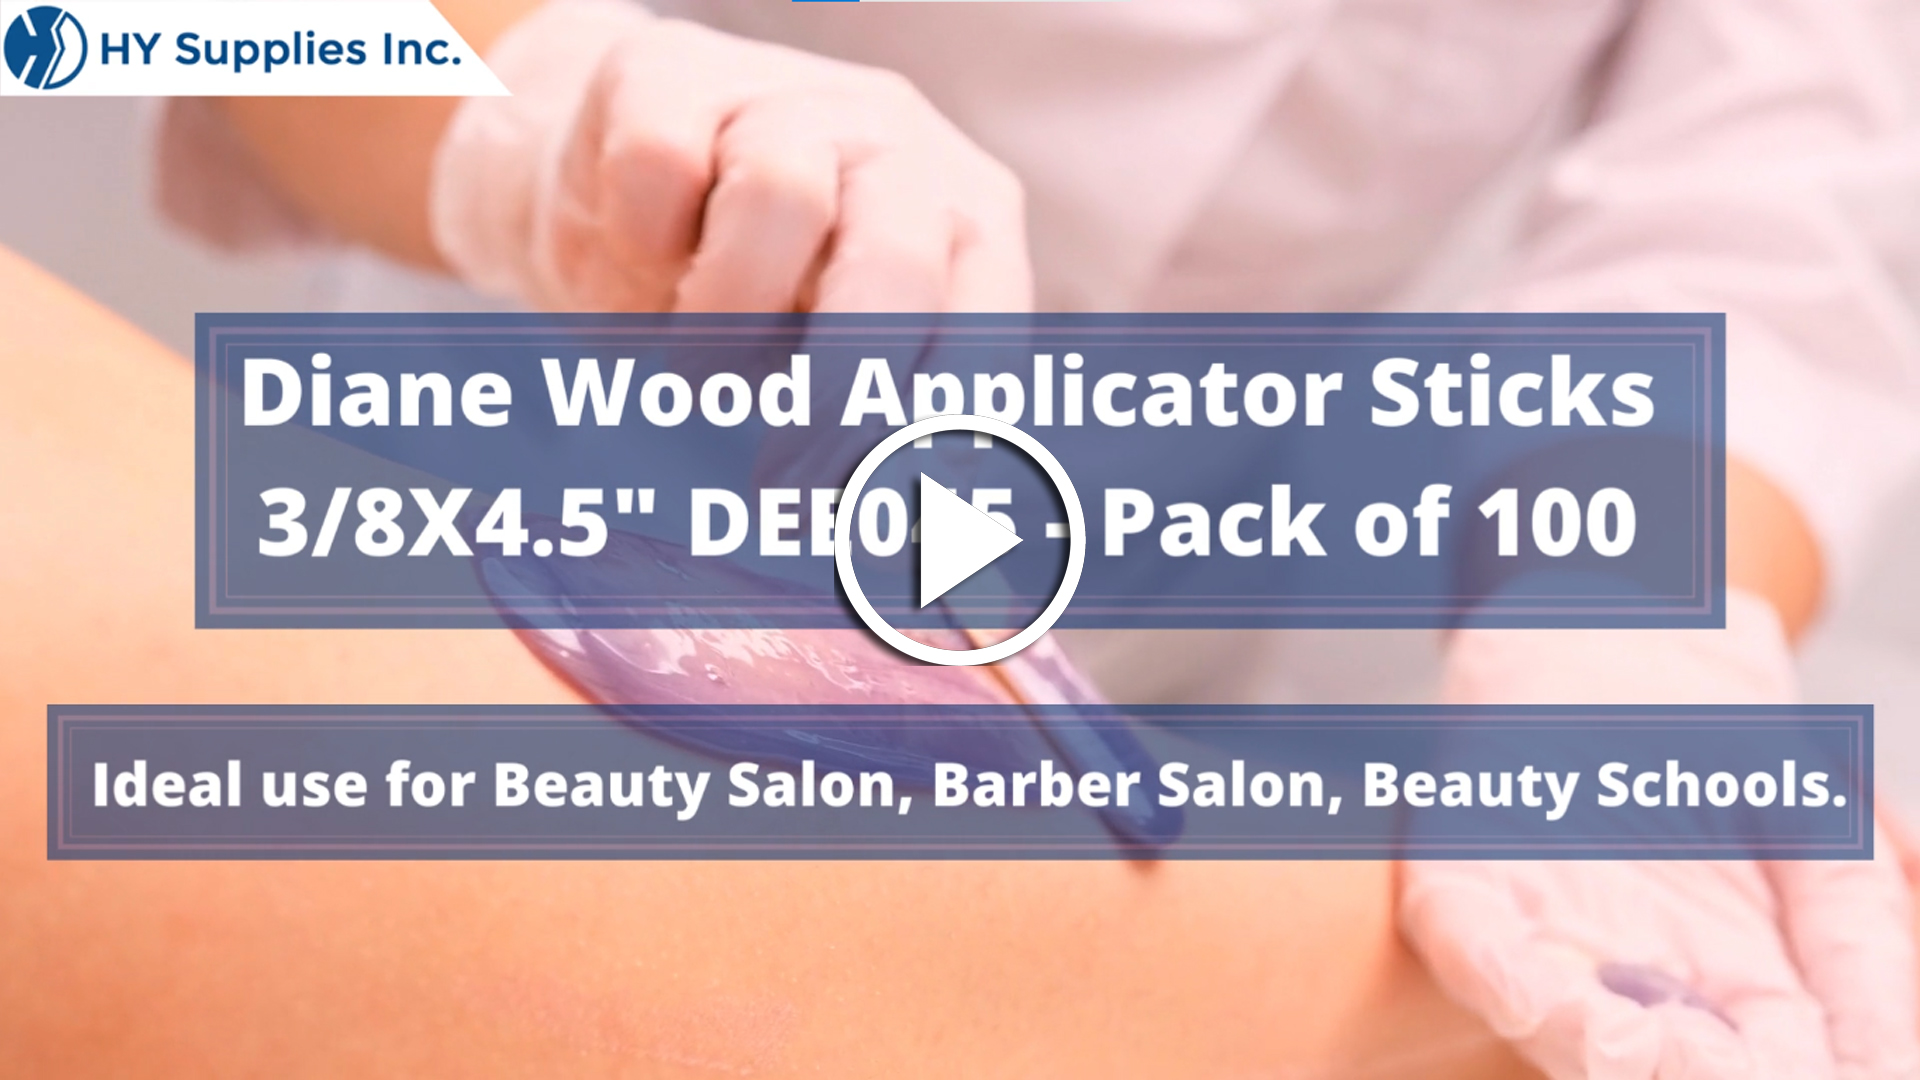 Diane Wood Applicator Sticks 3/8X4.5"DEE045 - Pack of 100